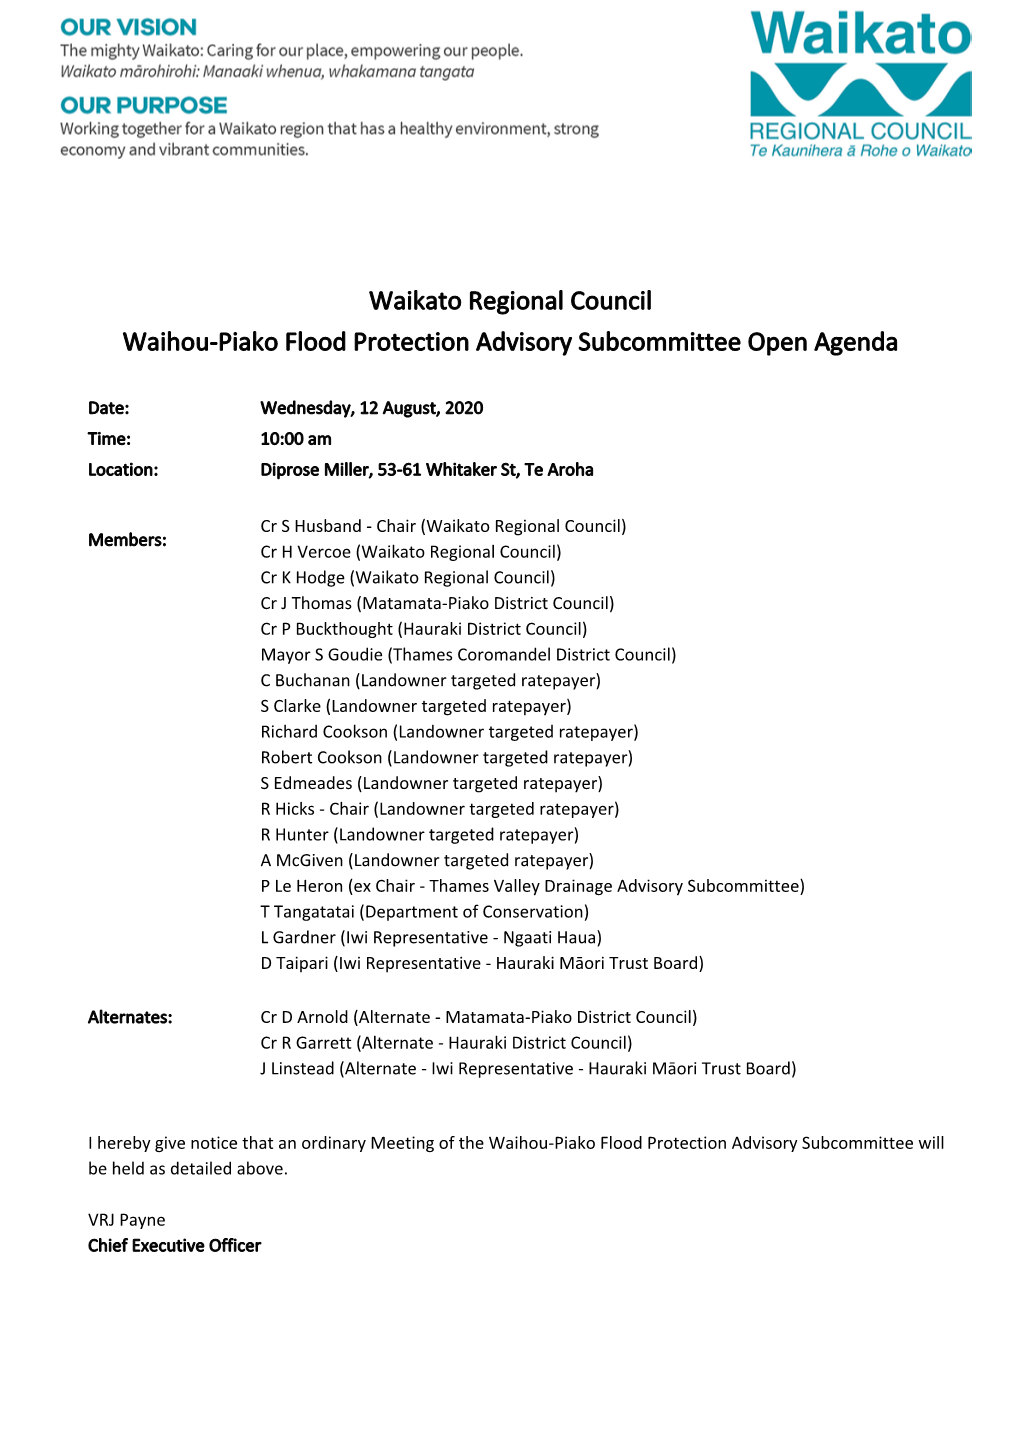 Waihou-Piako Flood Protection Advisory Subcommittee Agenda Pack